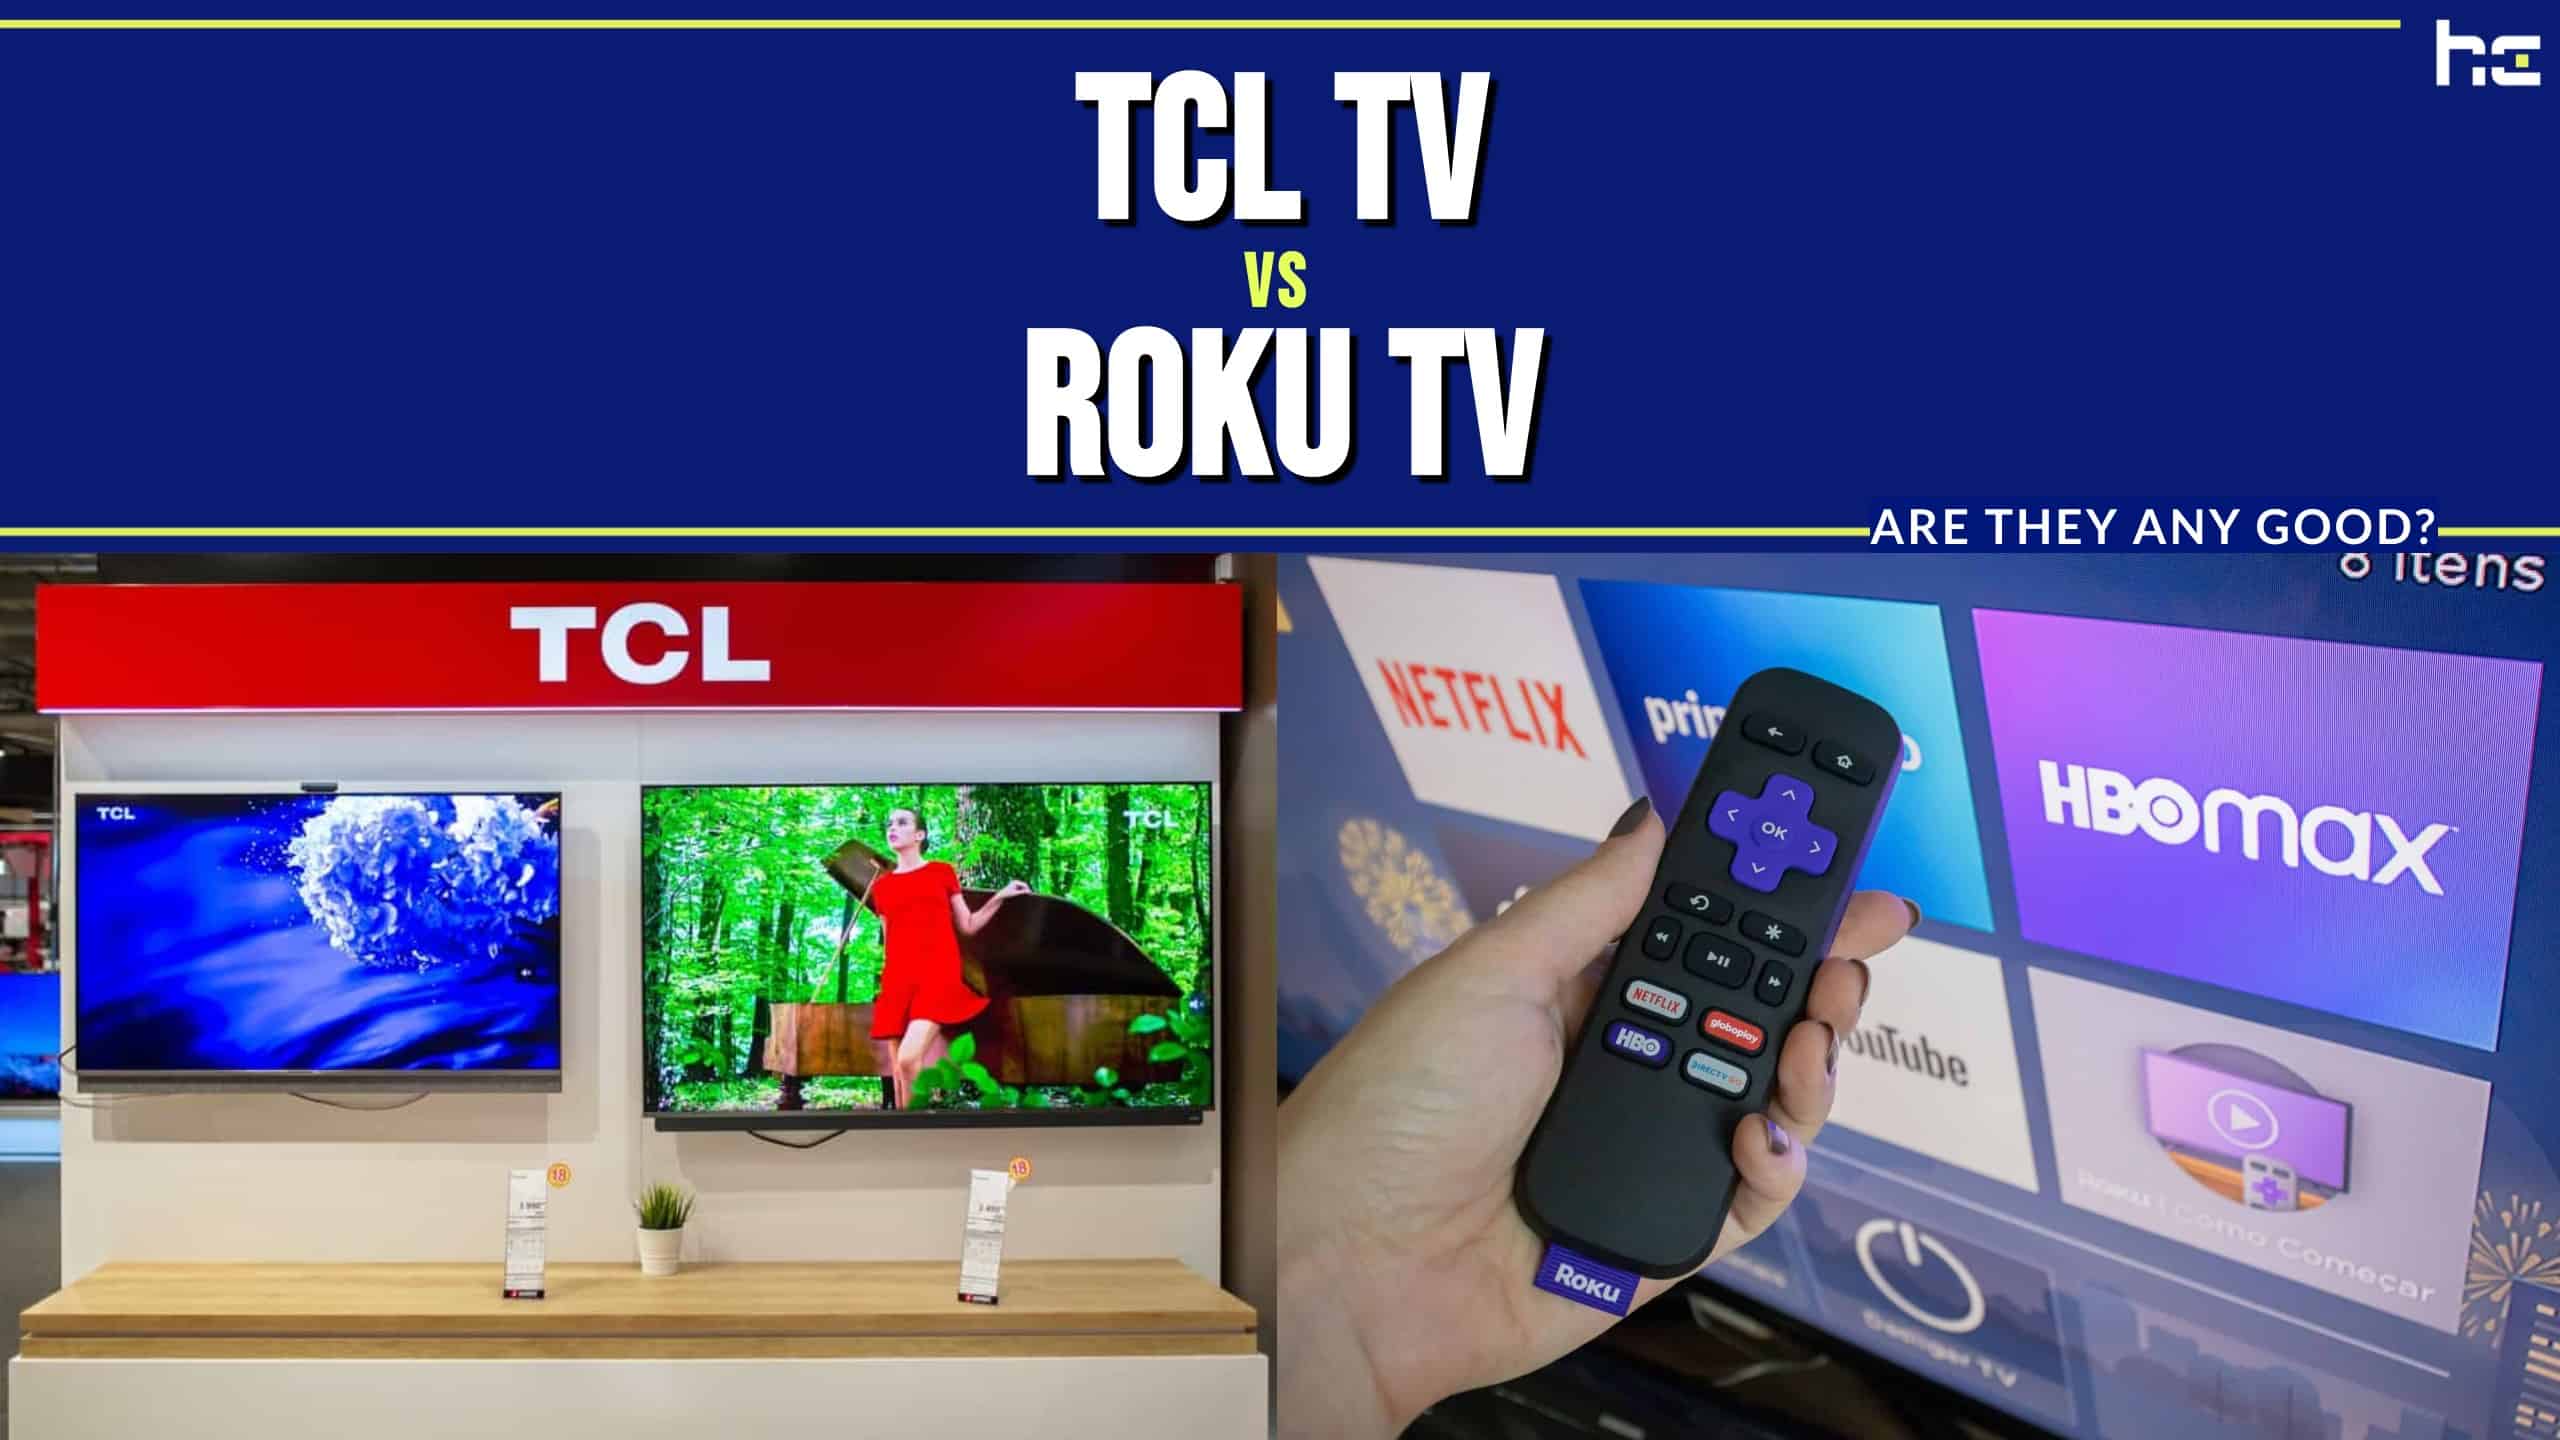 TCL TV vs Roku TV